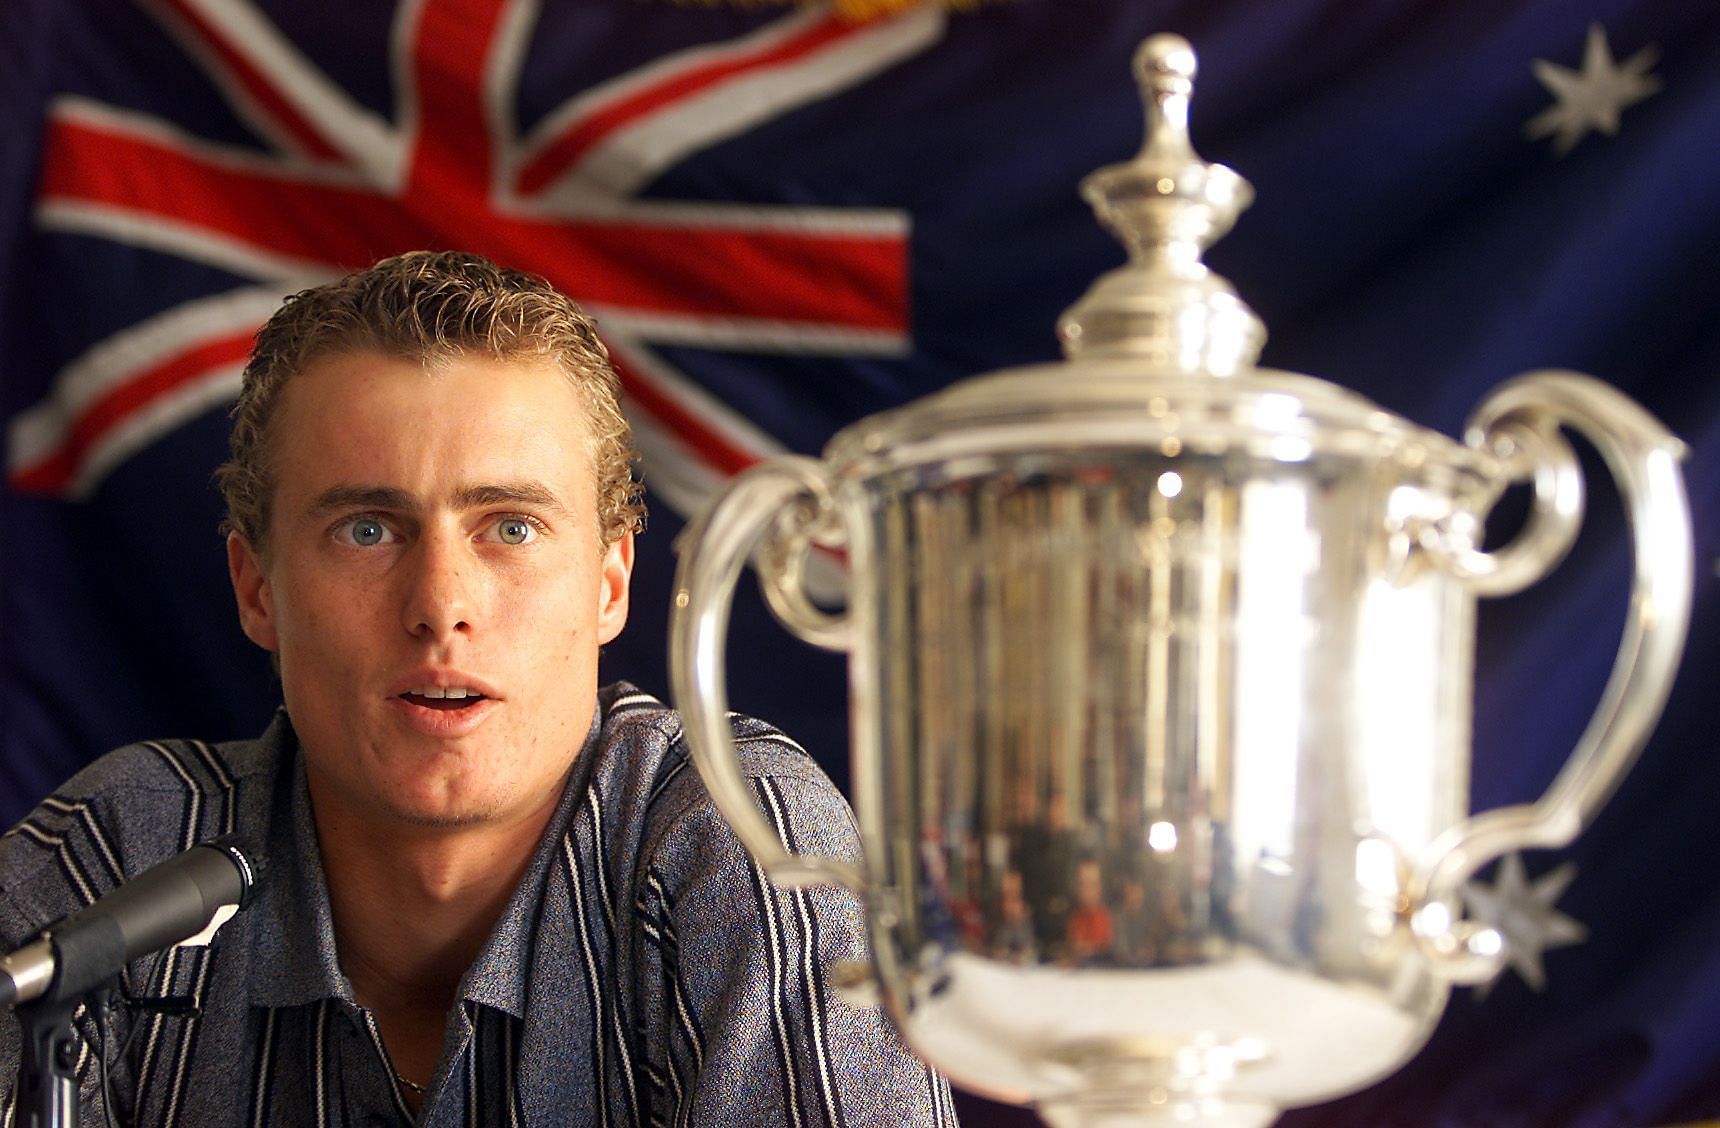 Lleyton Hewitt won the US Open in 2001.